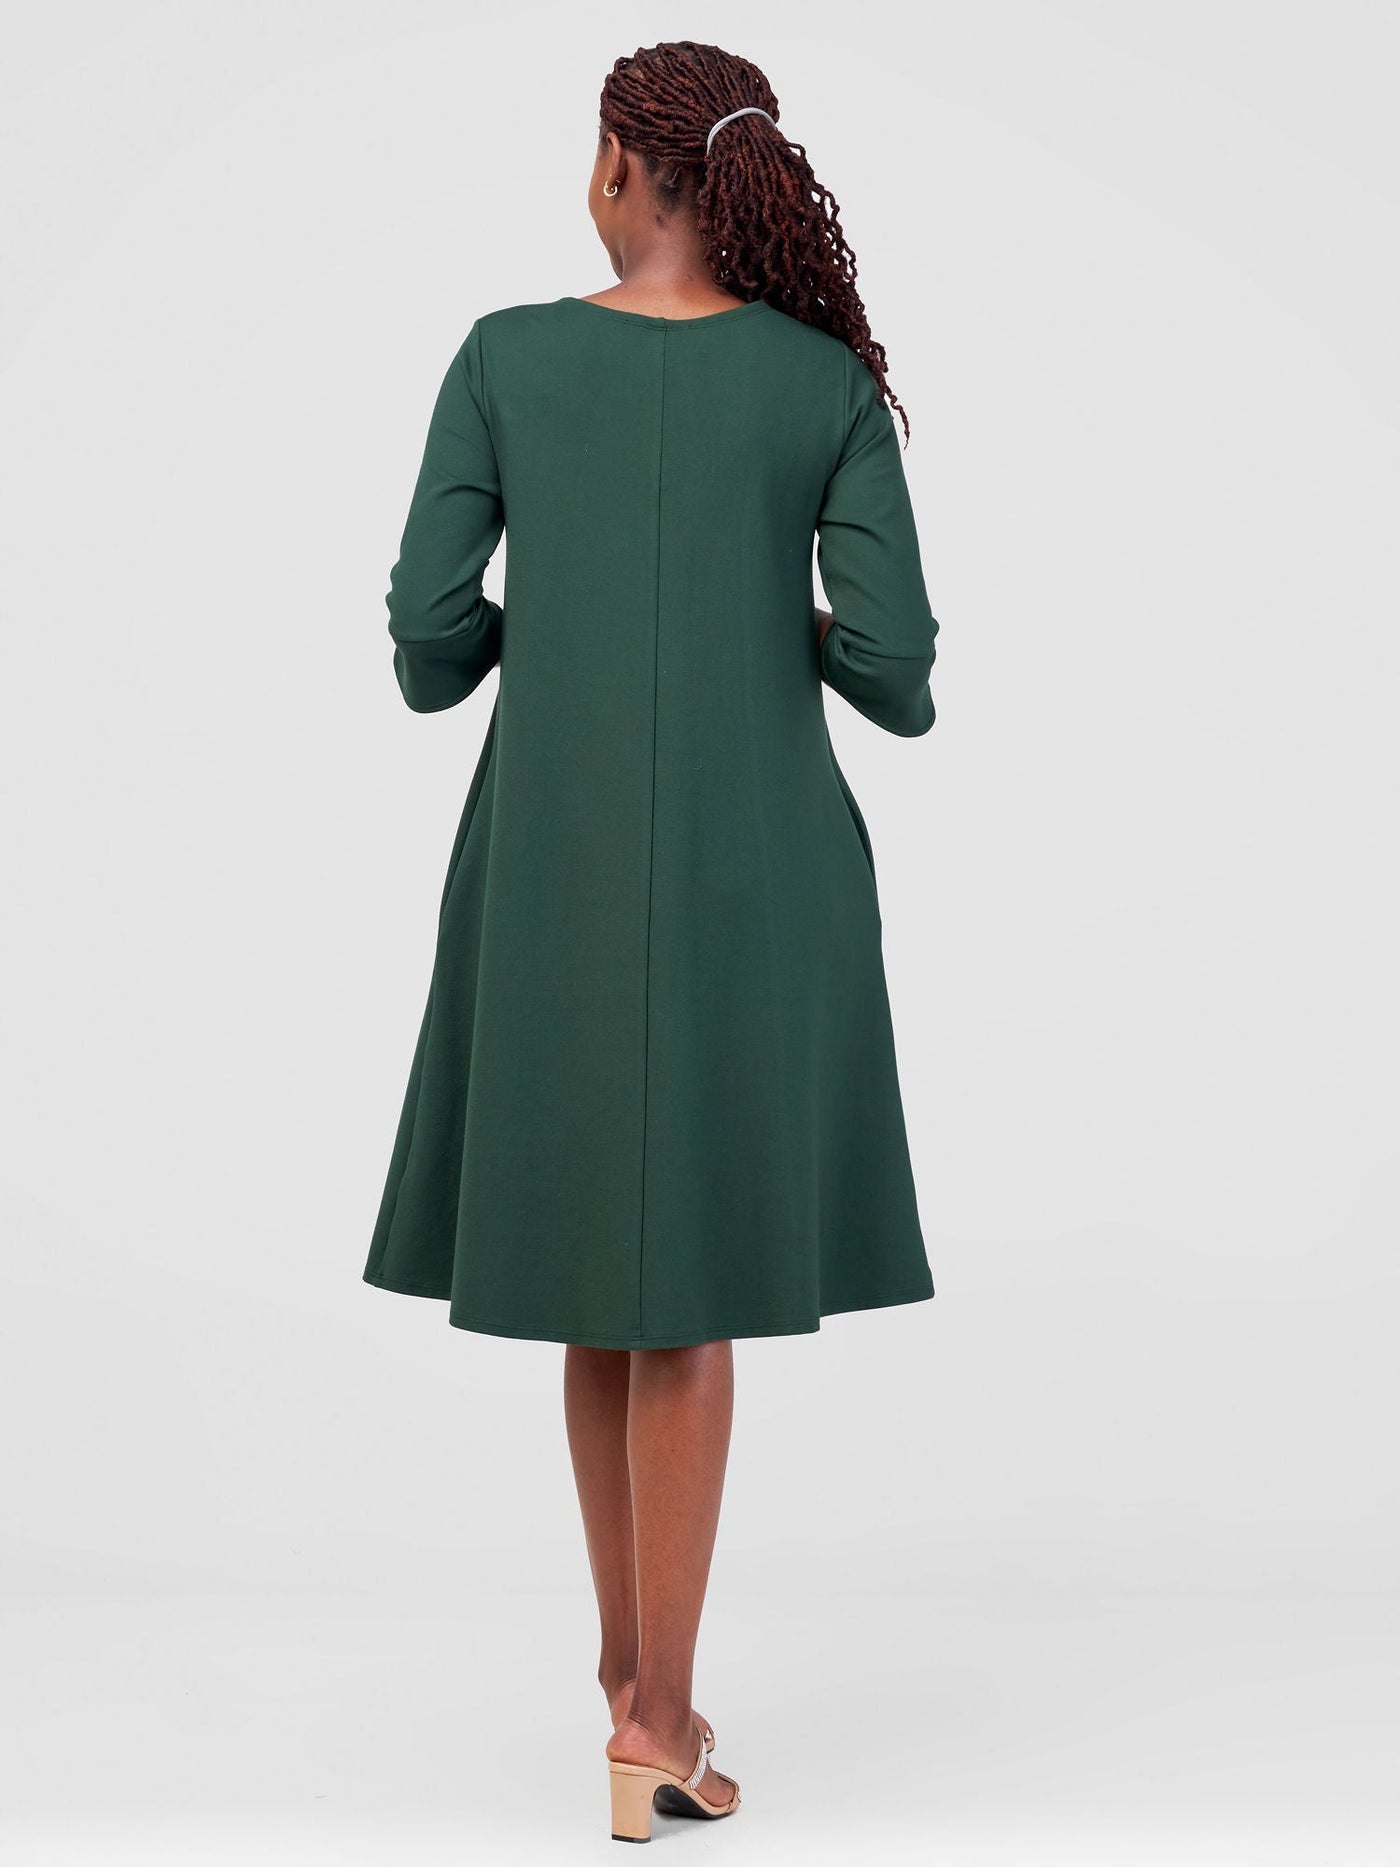 Vivo Zawadi Keyhole Dress - Green